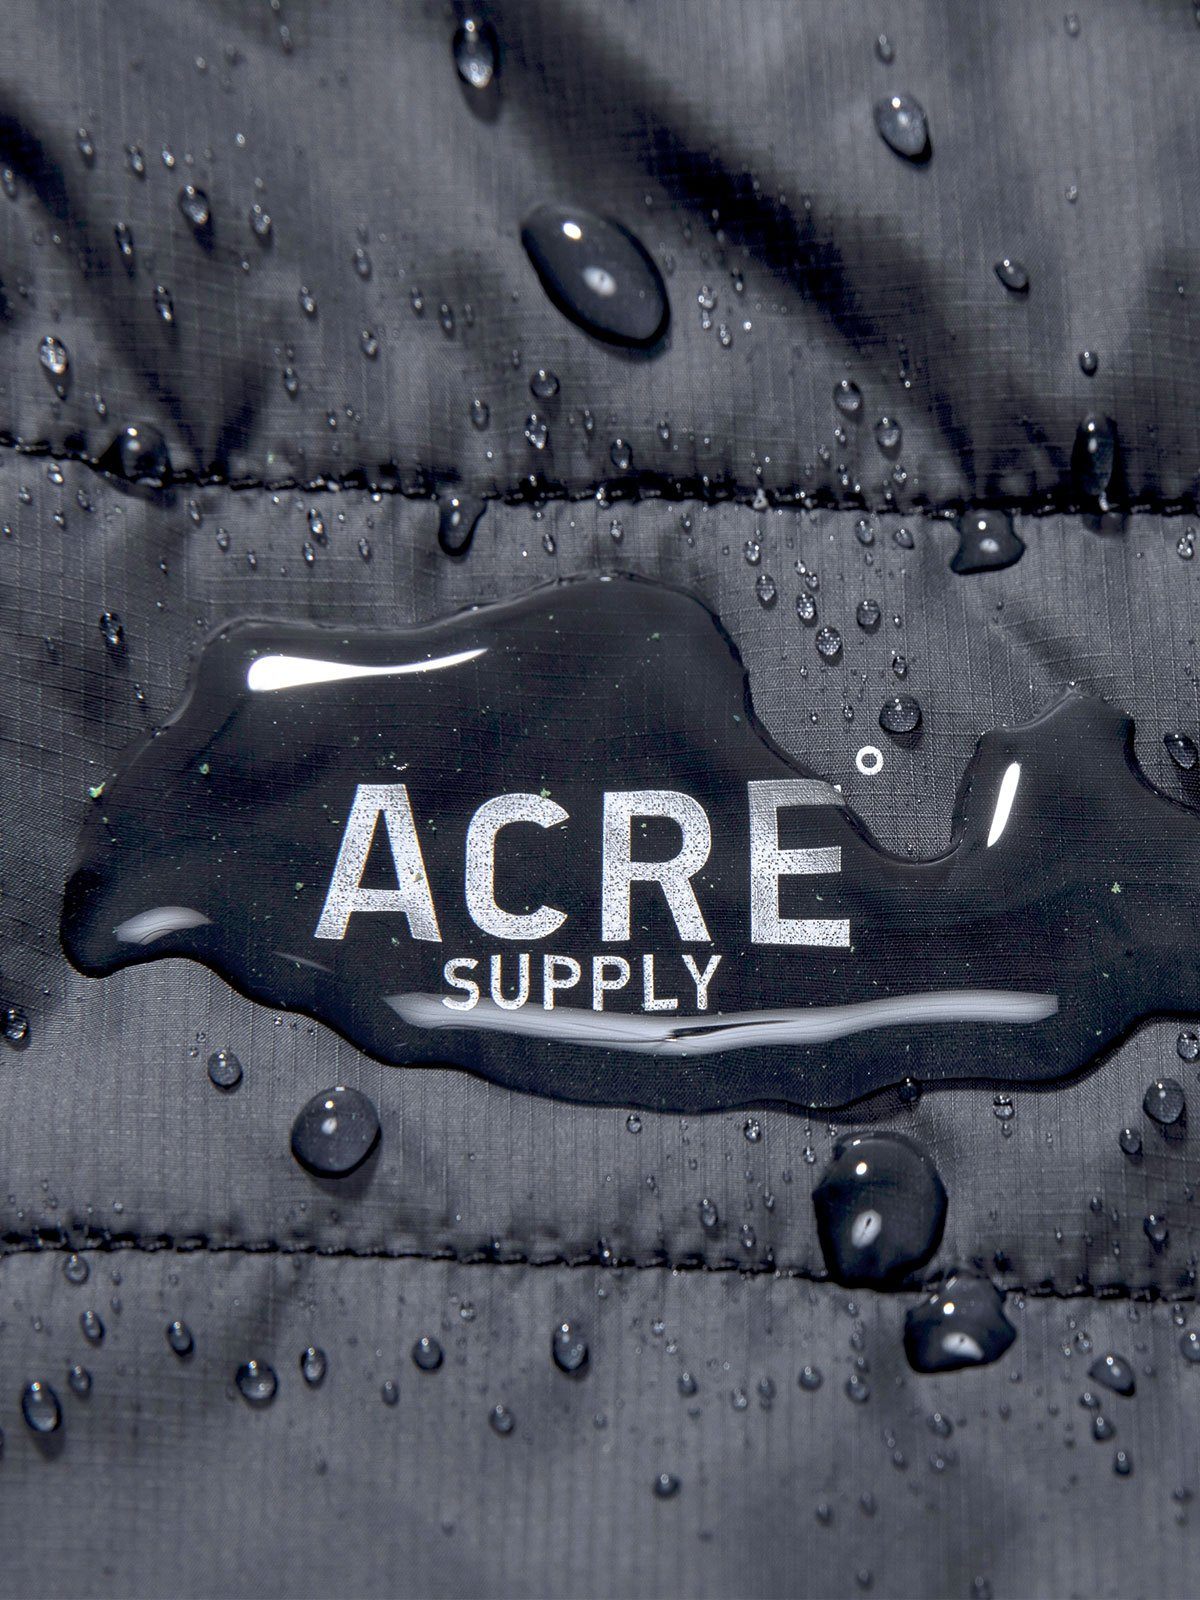 Acre Series Vest byMission Workshop - 耐候性バッグ＆テクニカルアパレル - サンフランシスコ＆ロサンゼルス - 耐久性に優れた作り - 永久保証